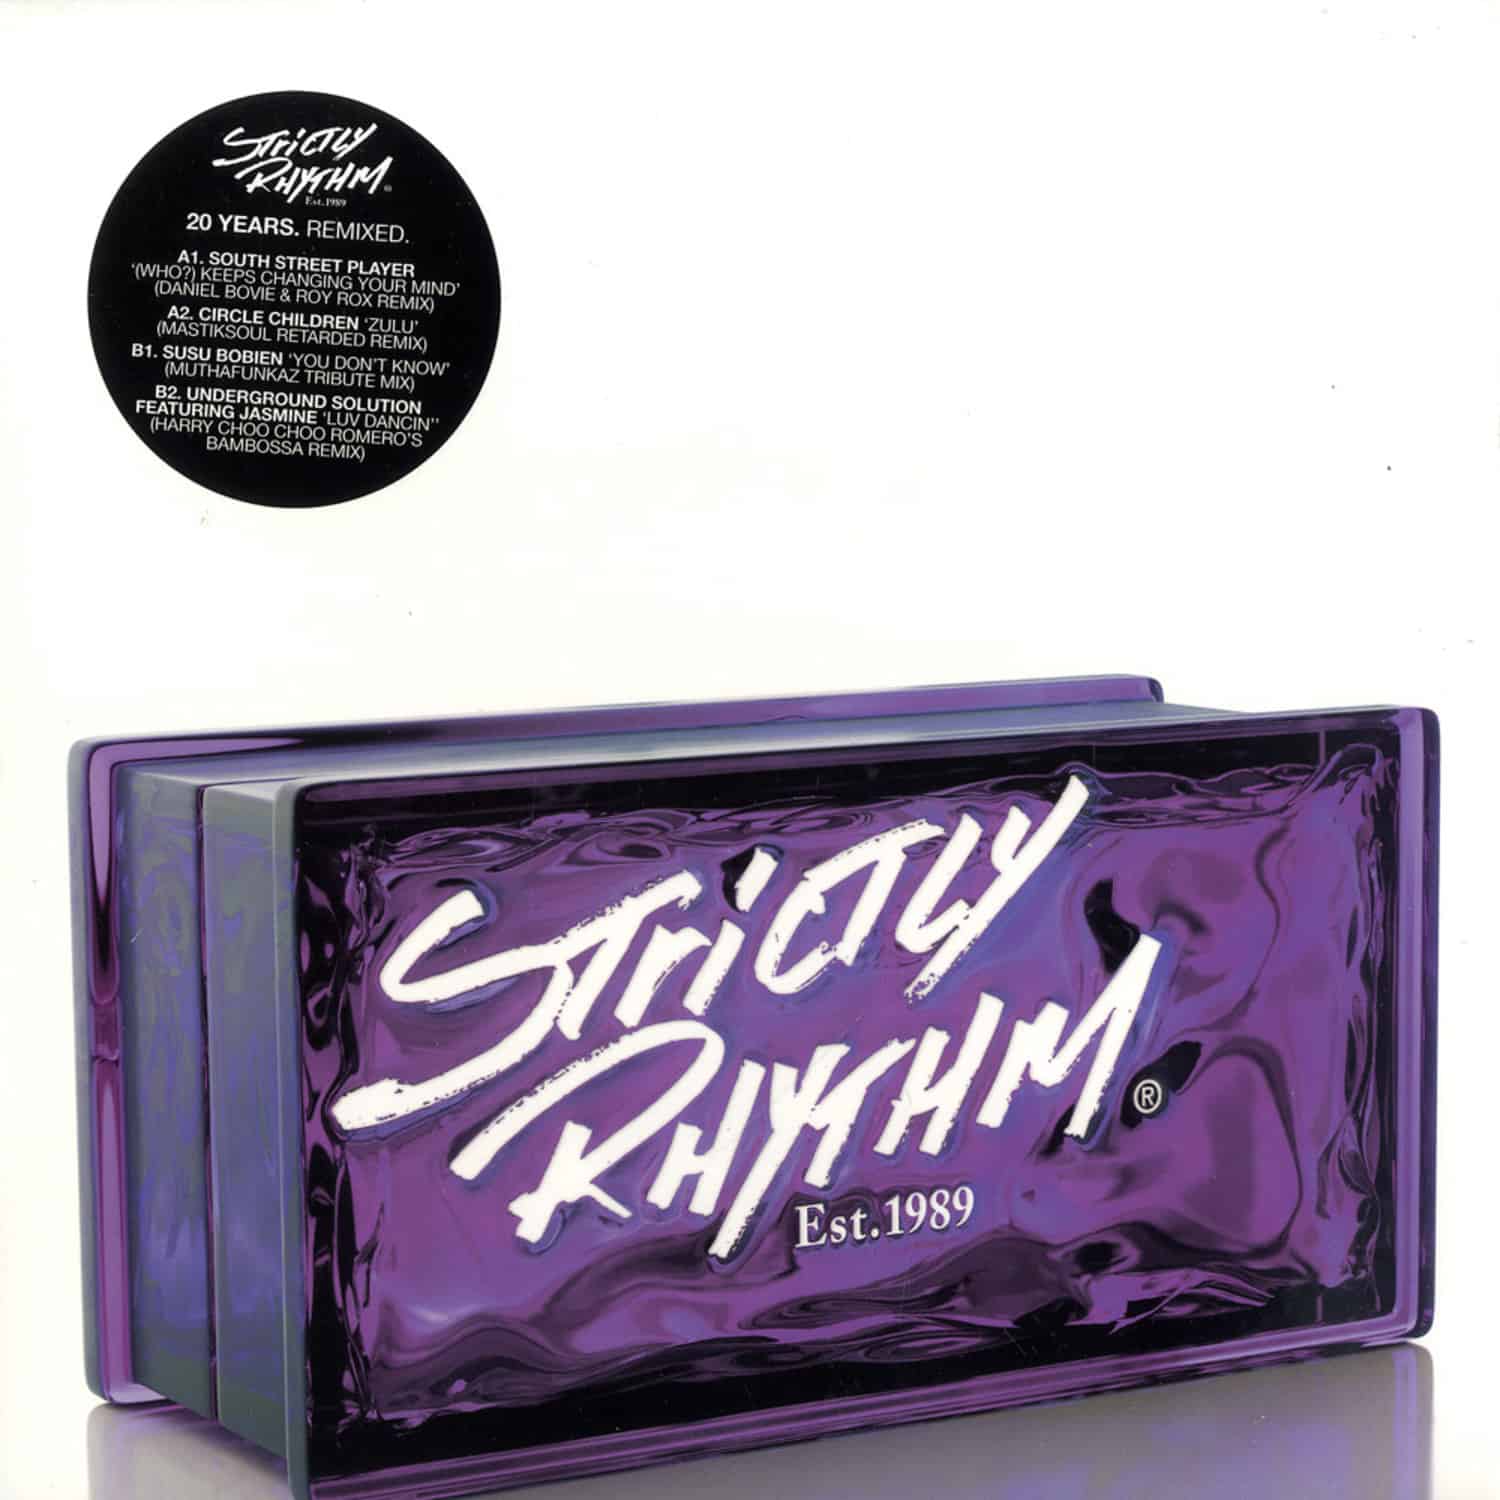 Strictly Rhythm Est. 1989 - 20 YEARS REMIXED SAMPLER 4